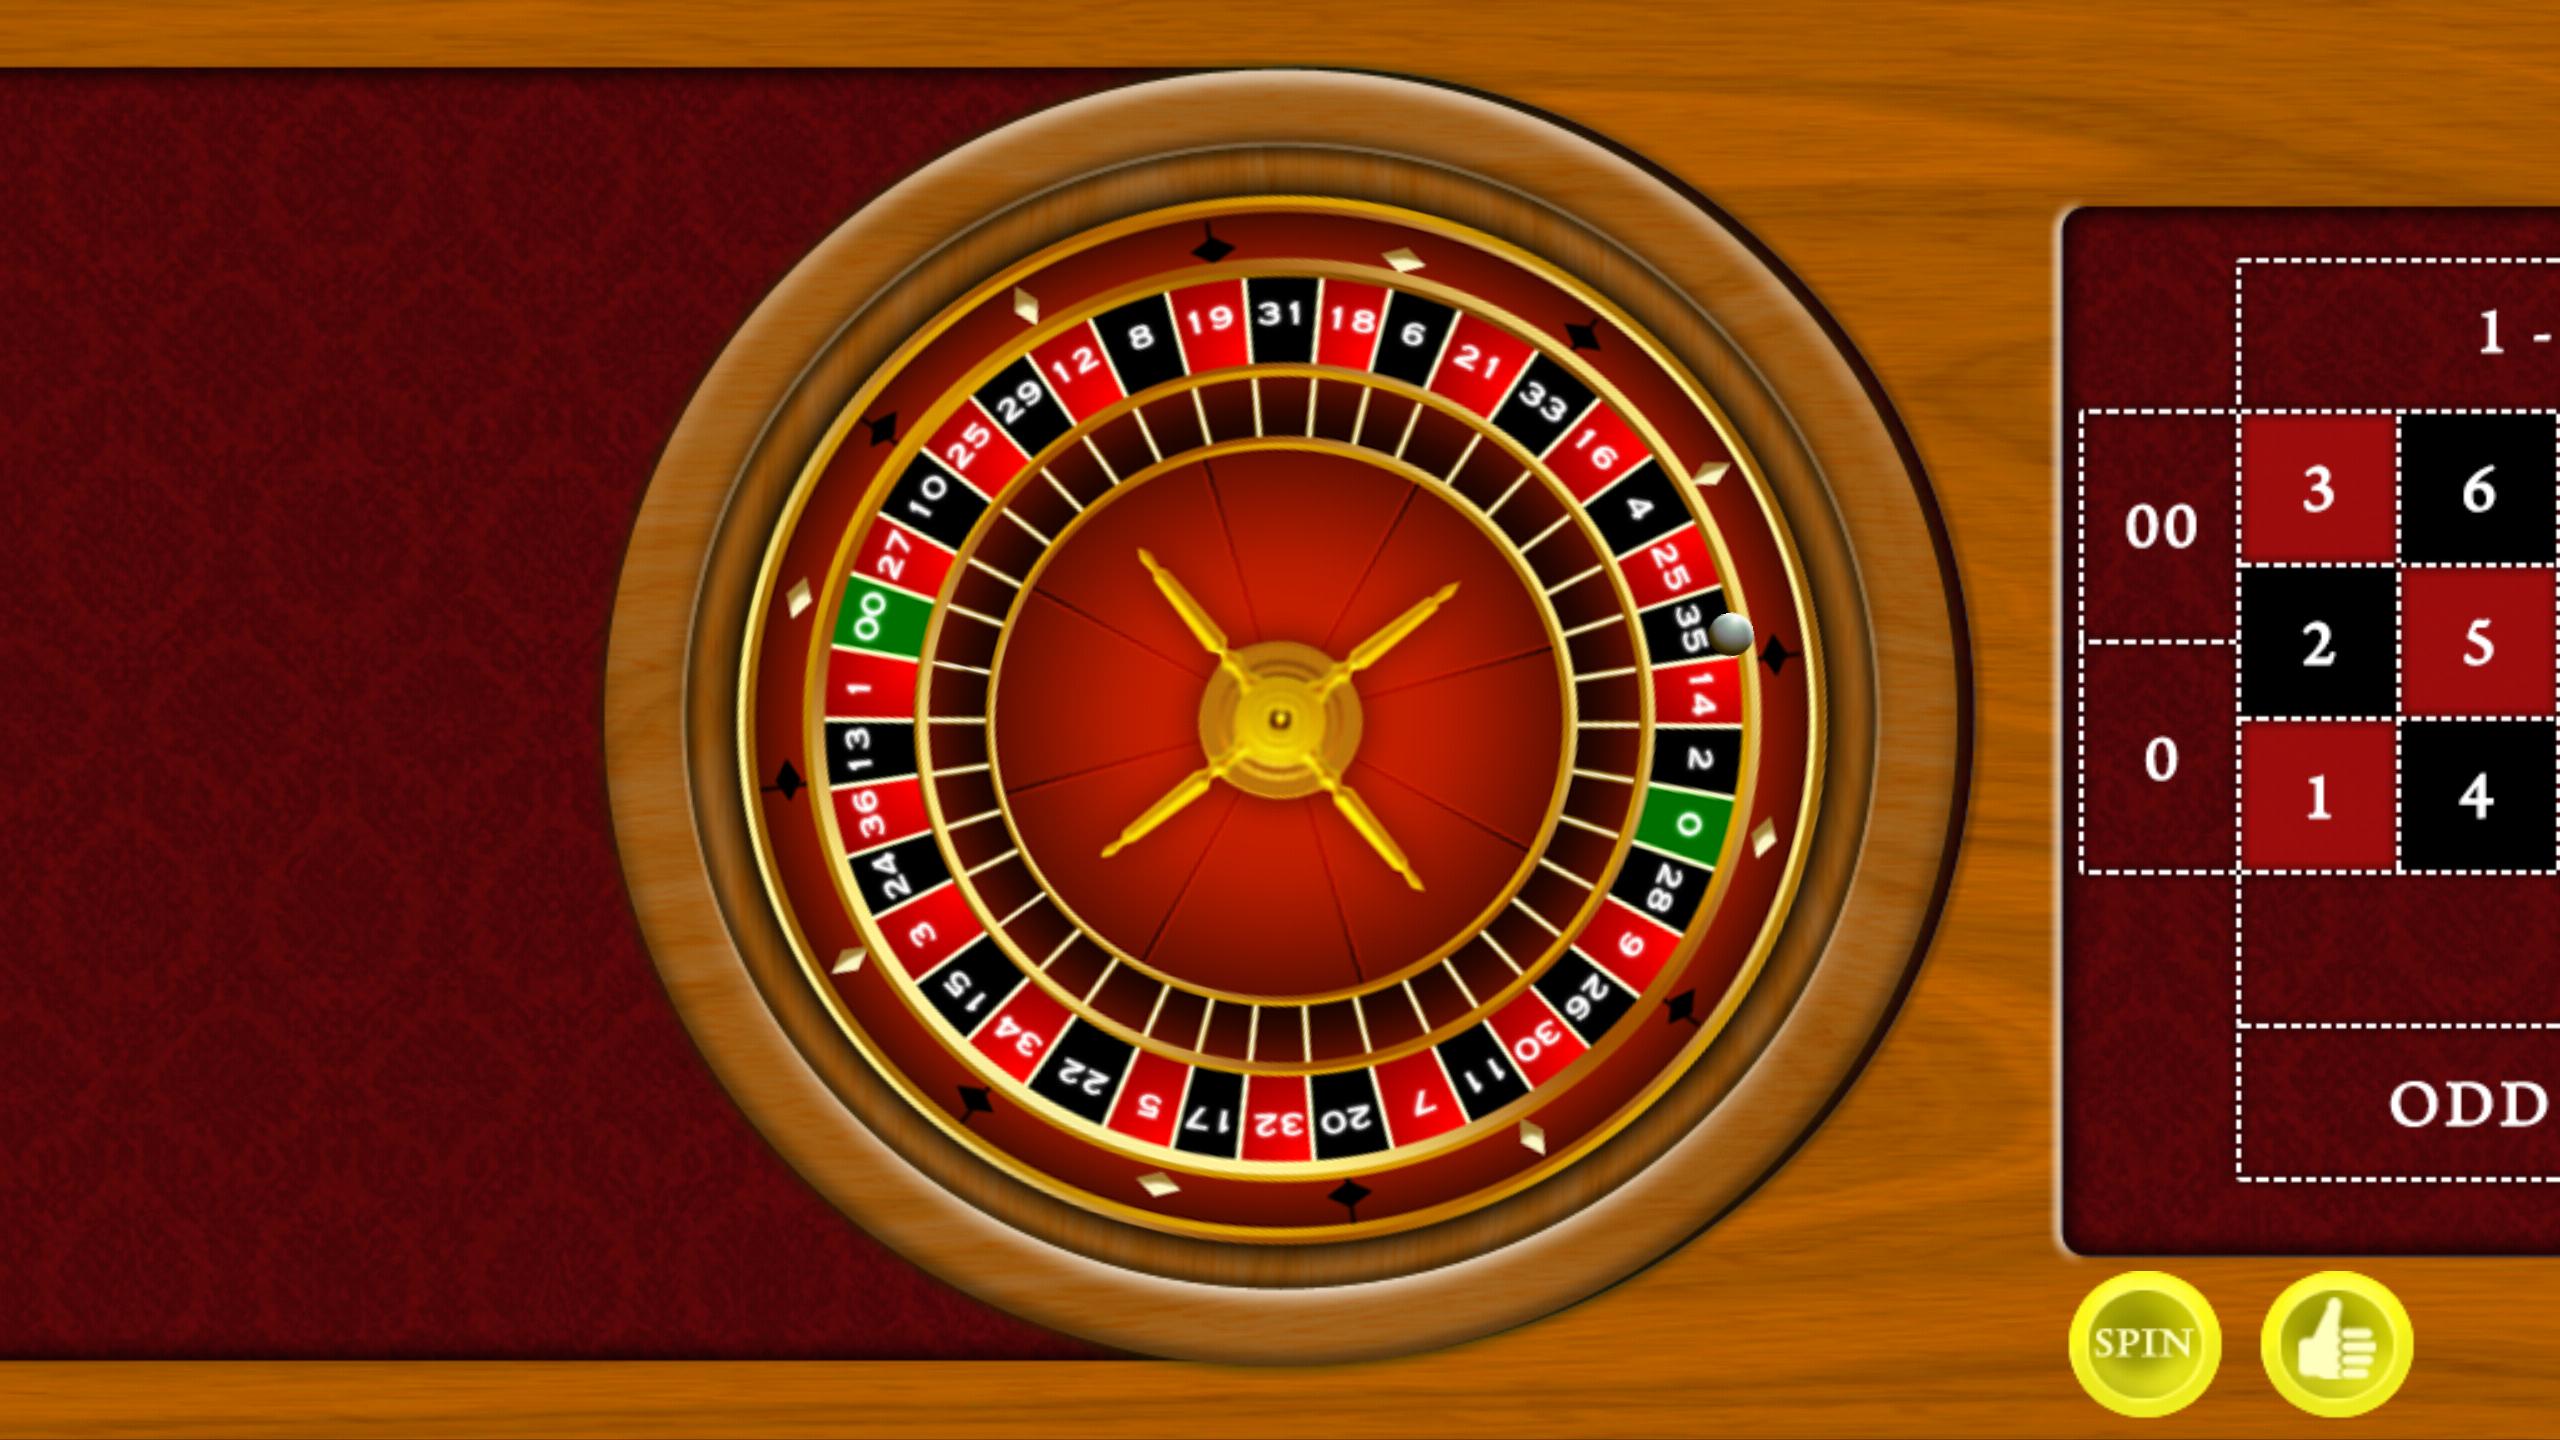 Juegos De Casino 888.Com